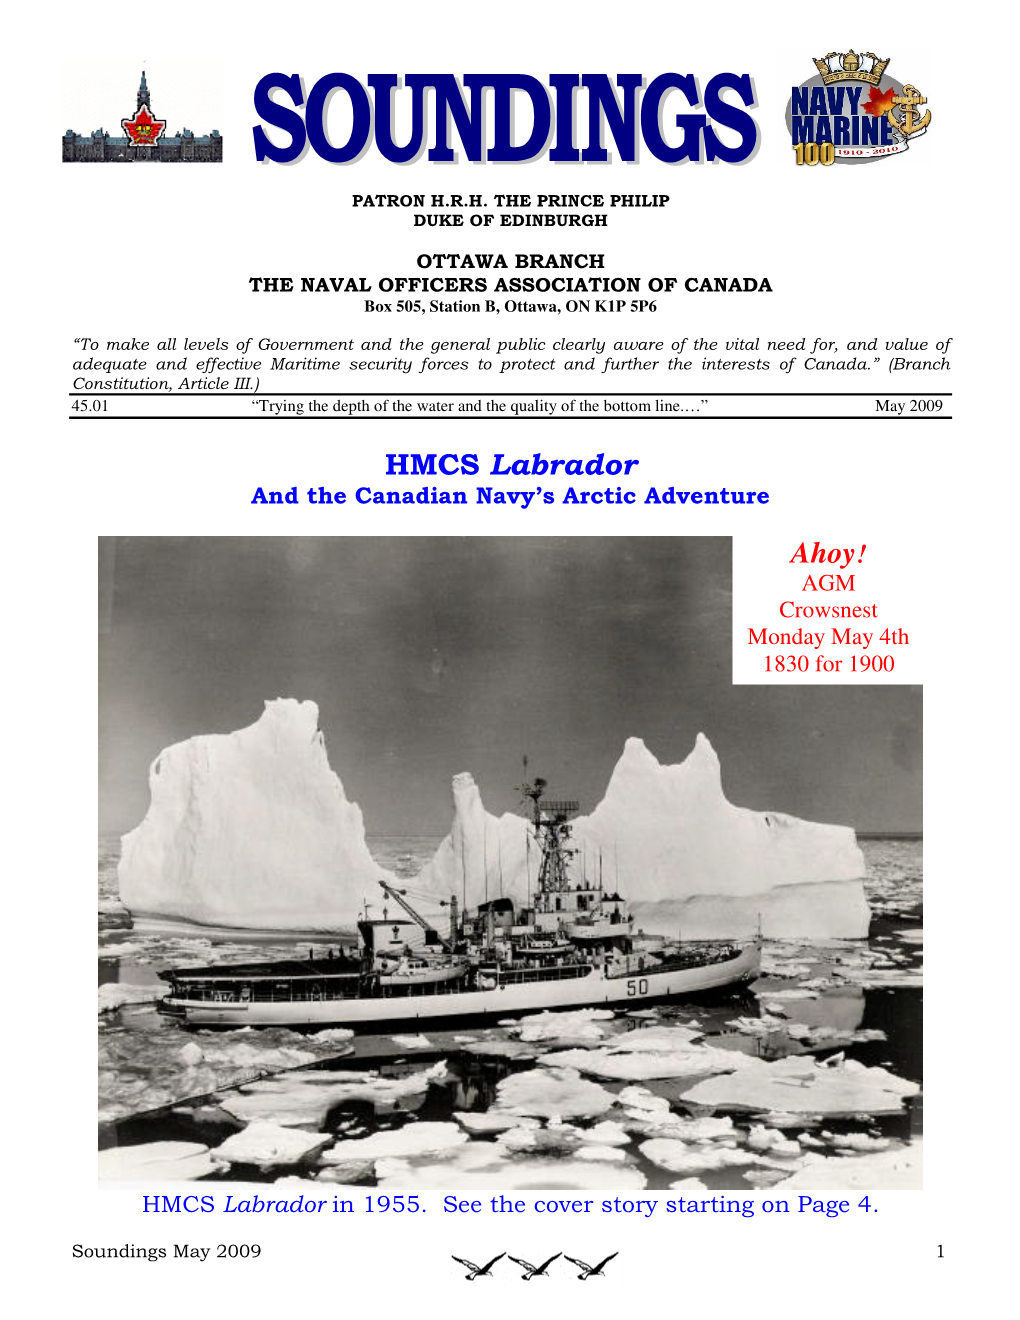 HMCS Labrador Ahoy!